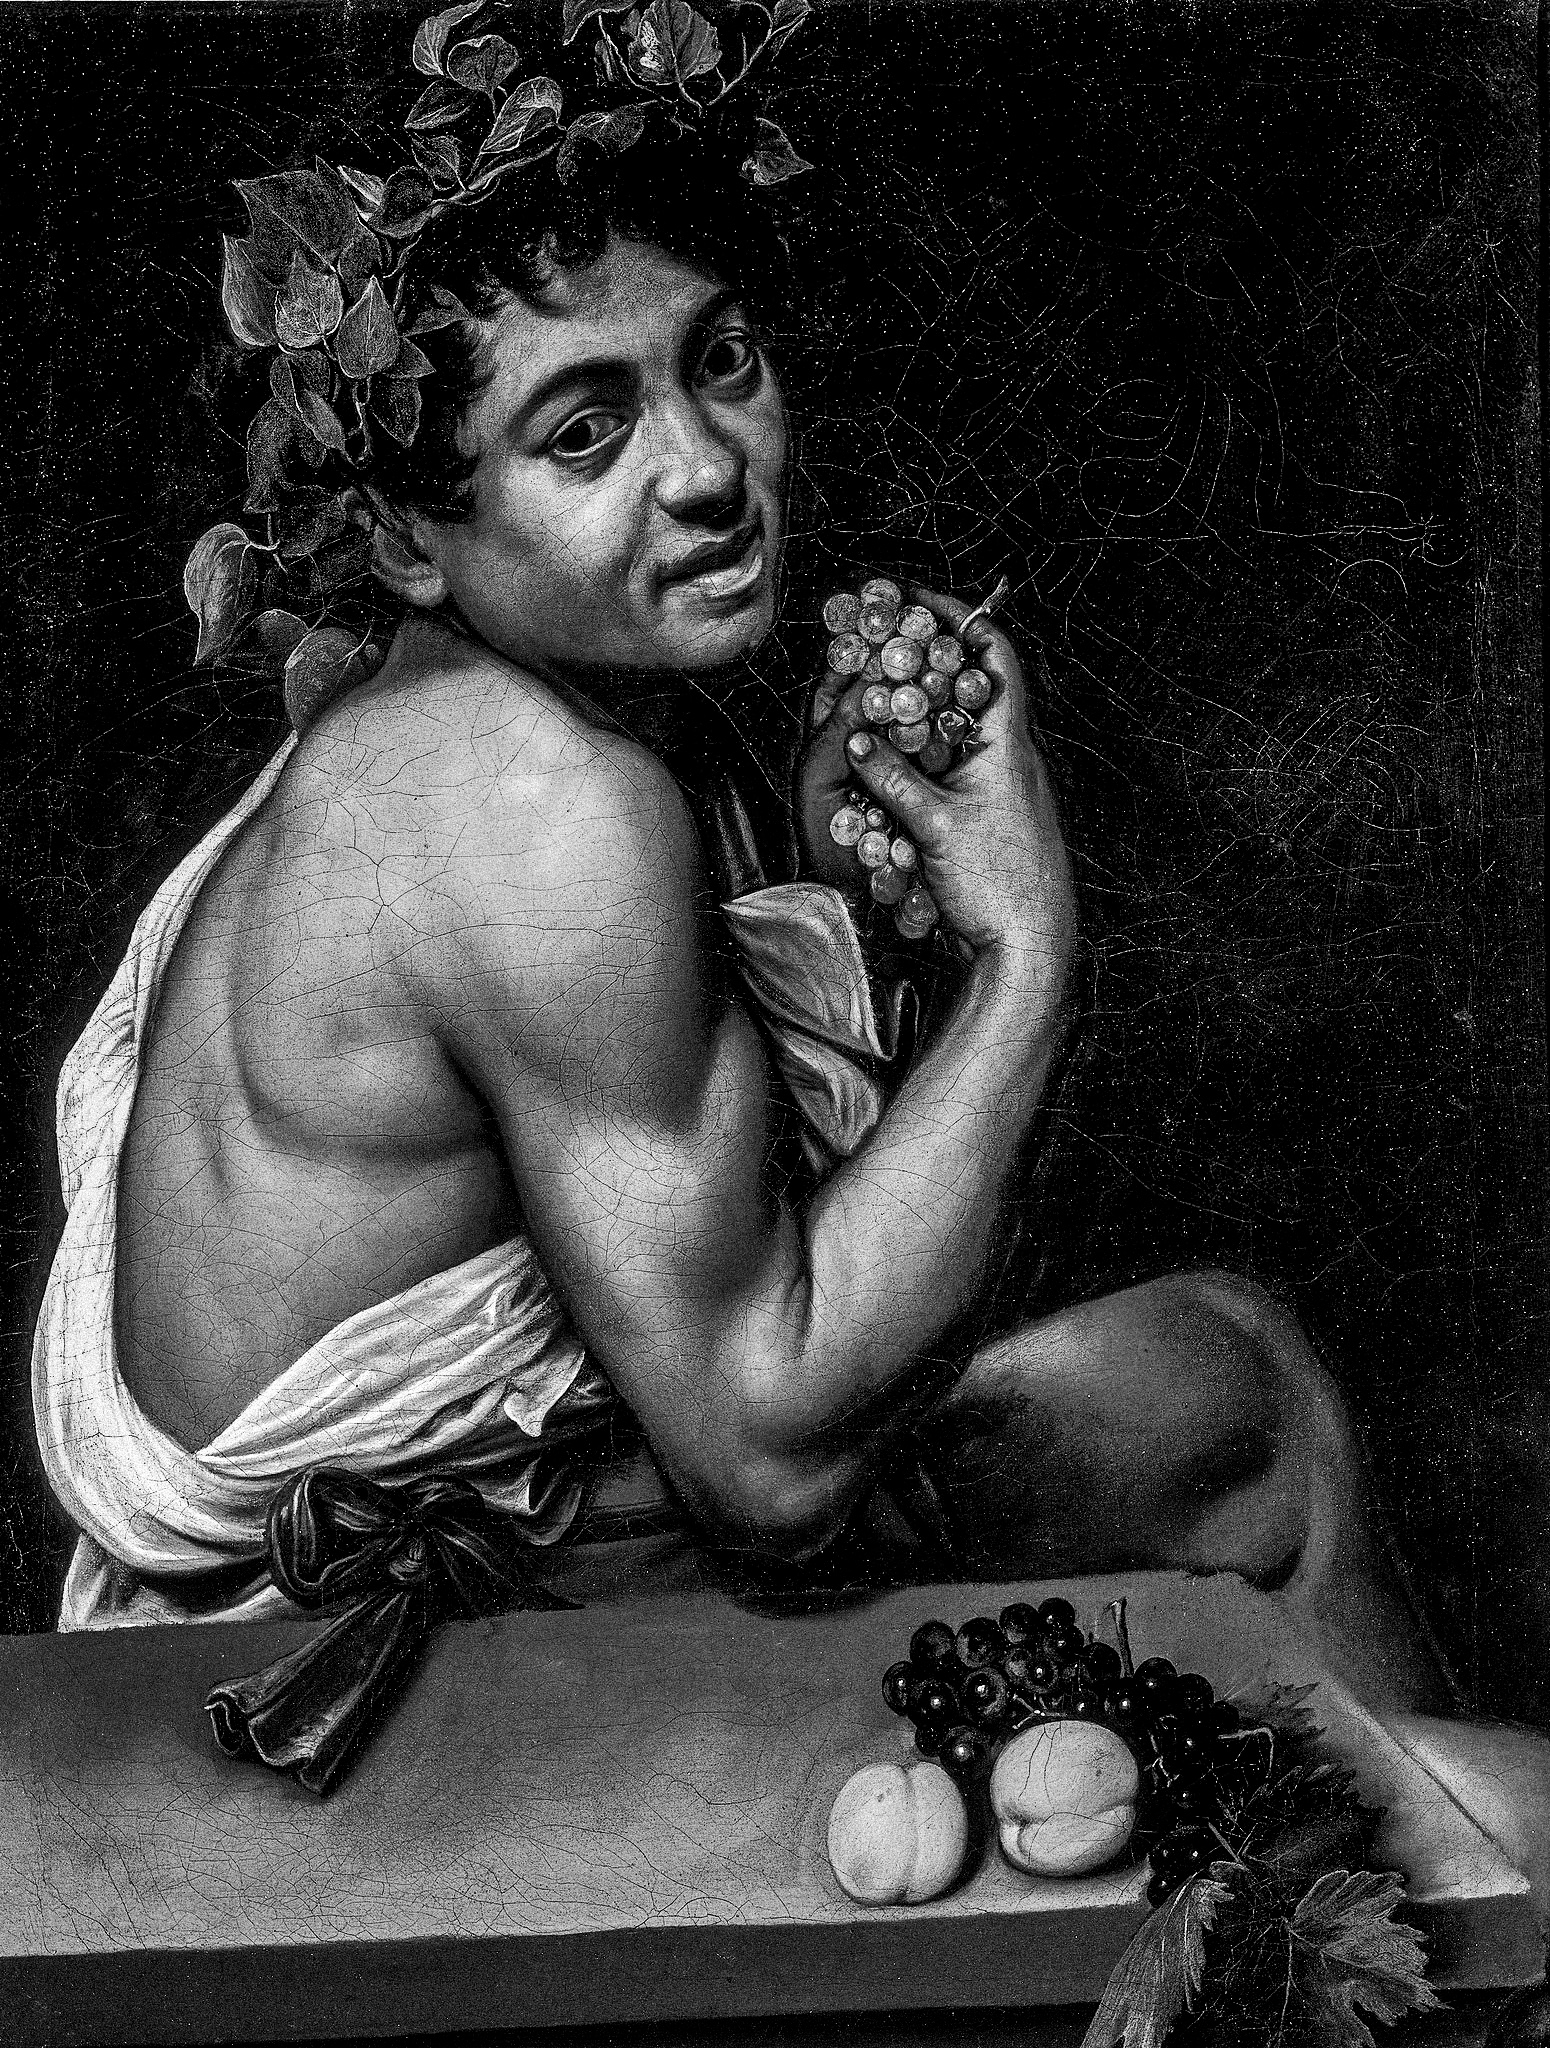 Self-Portrait as Bacchus (1593) by Caravaggio